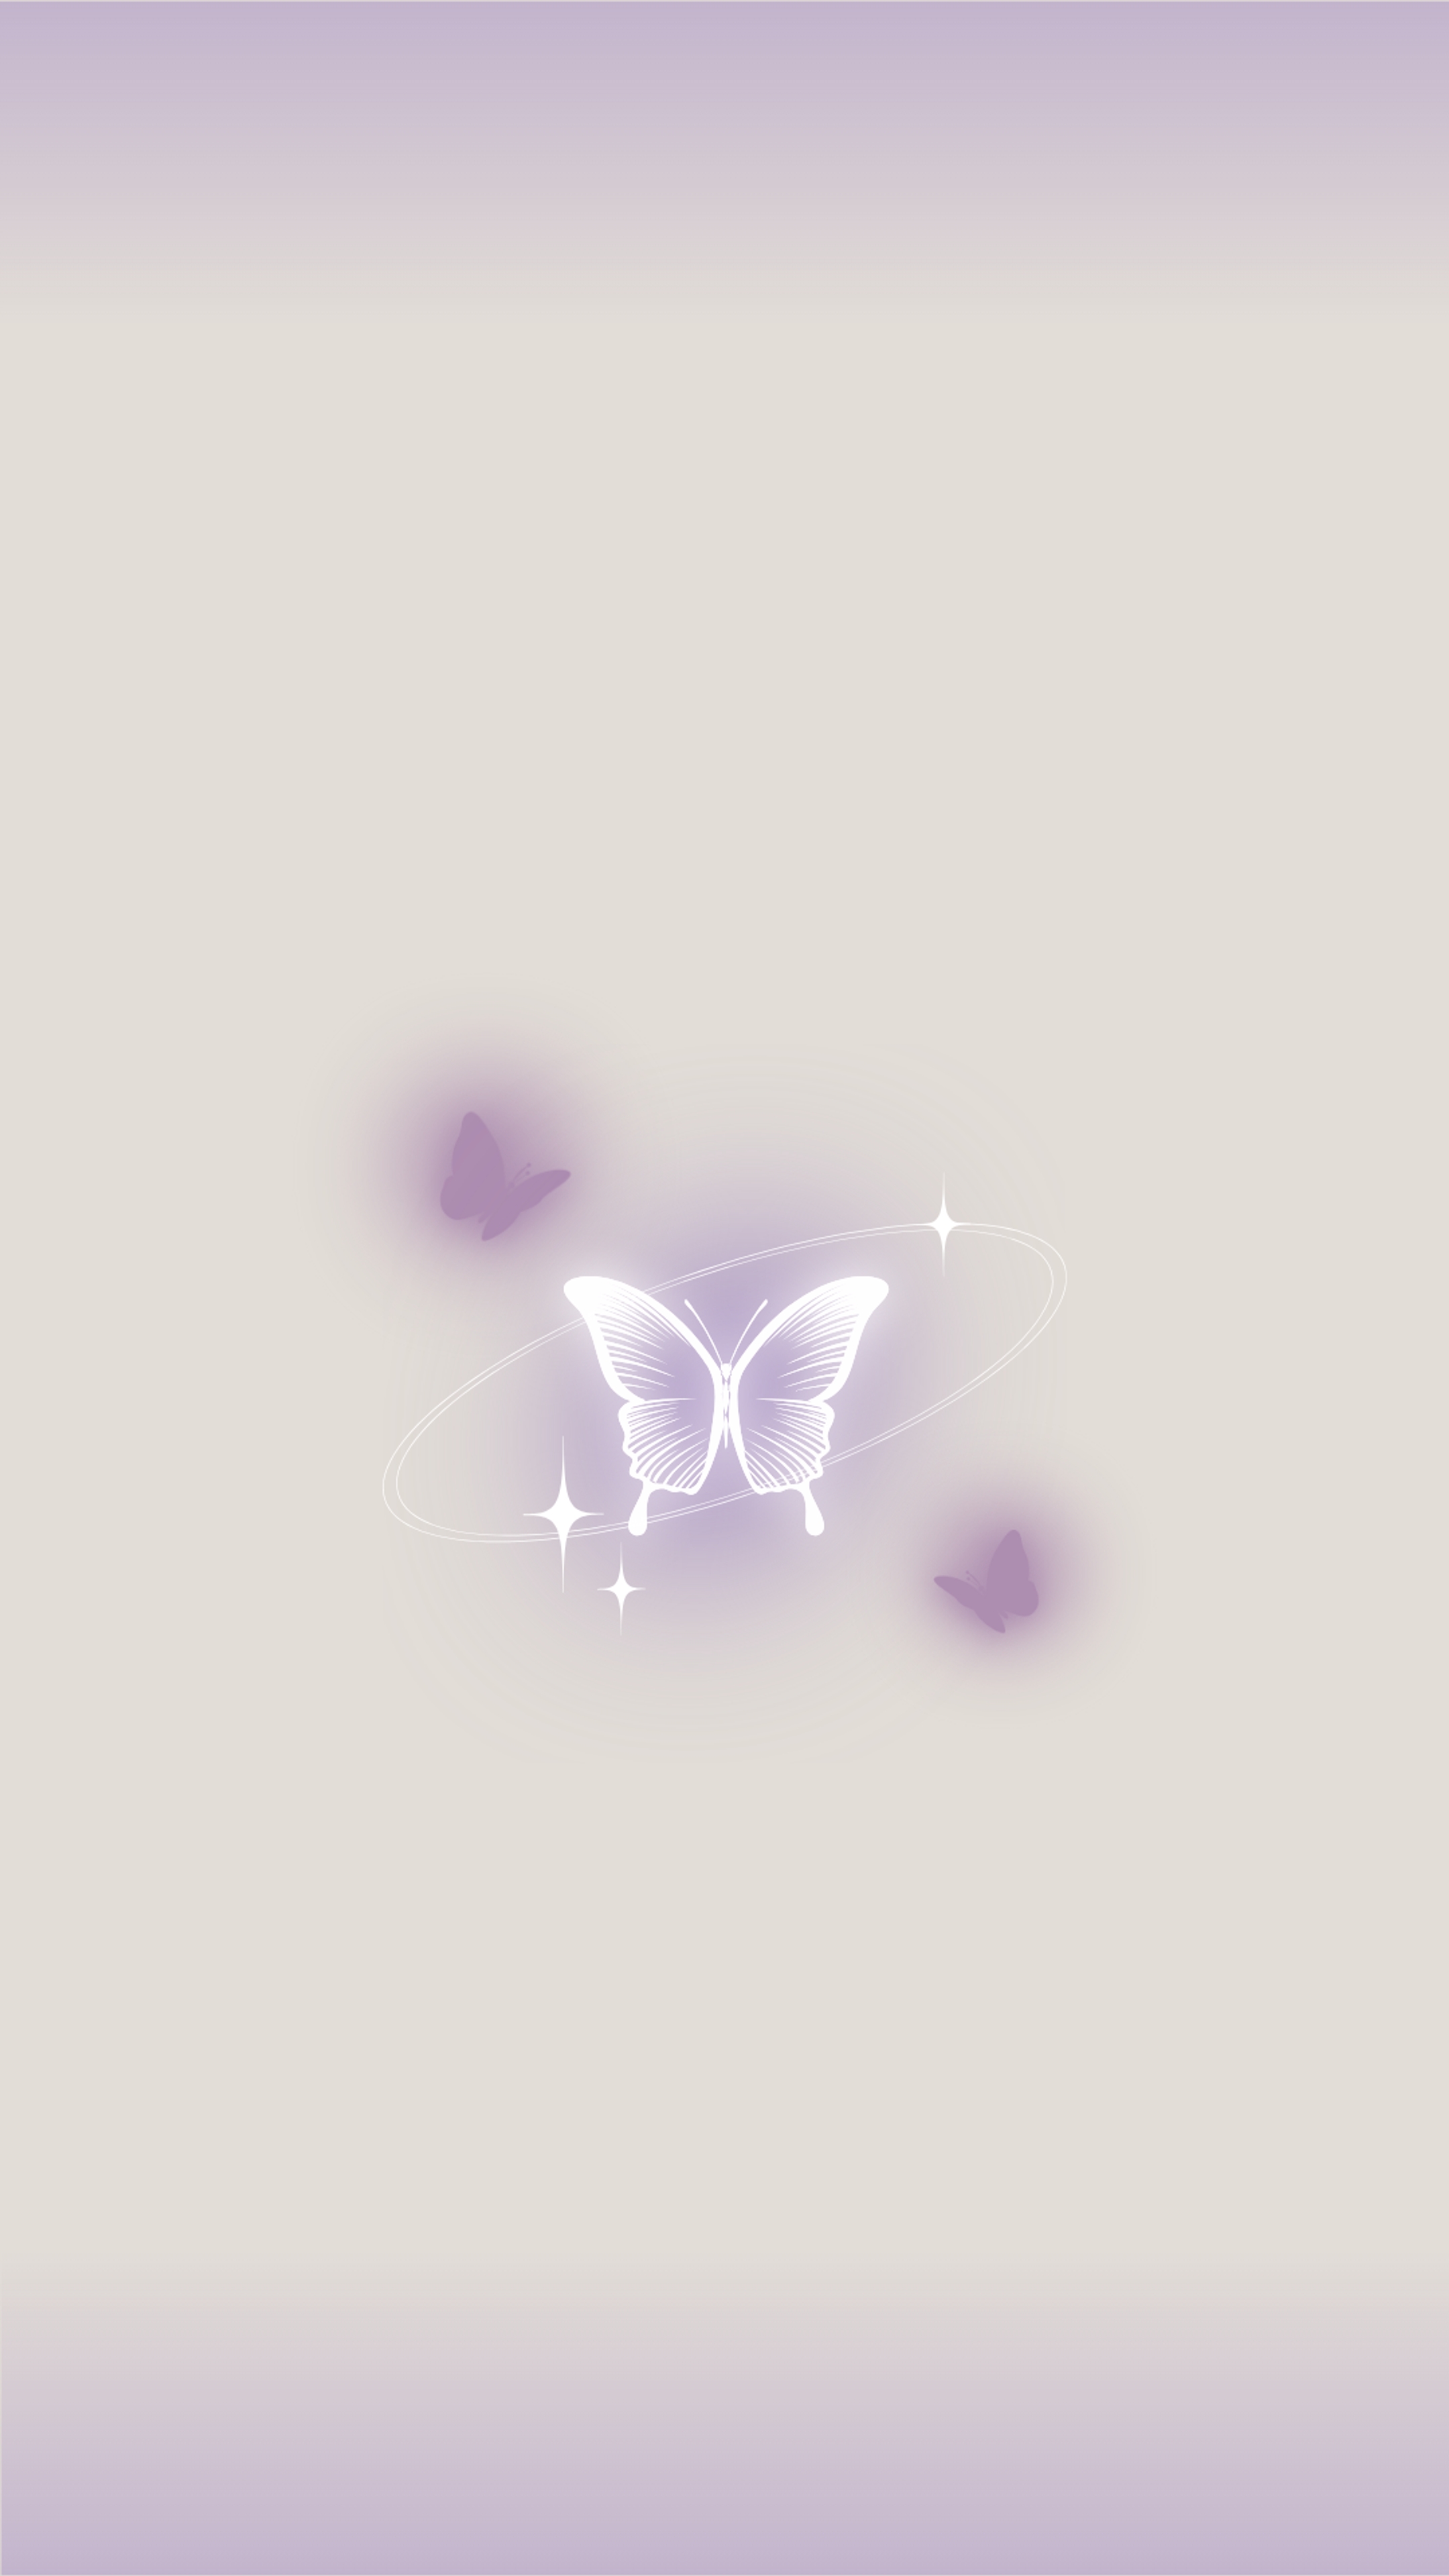 Shimmering Purple Butterflies on Soft Beige Background Ფონი[c2a86703d1a24467afd0]